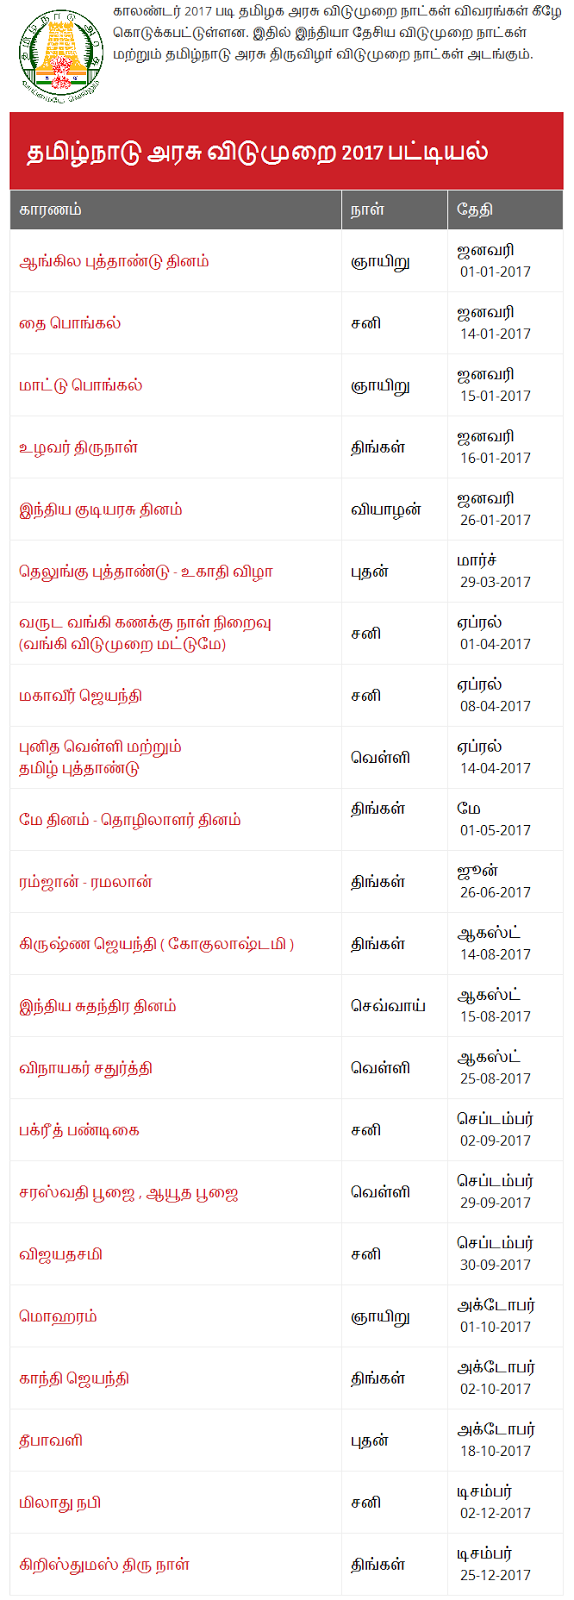 Tamilnadu Government holidays 2017, Public holidays 2017 